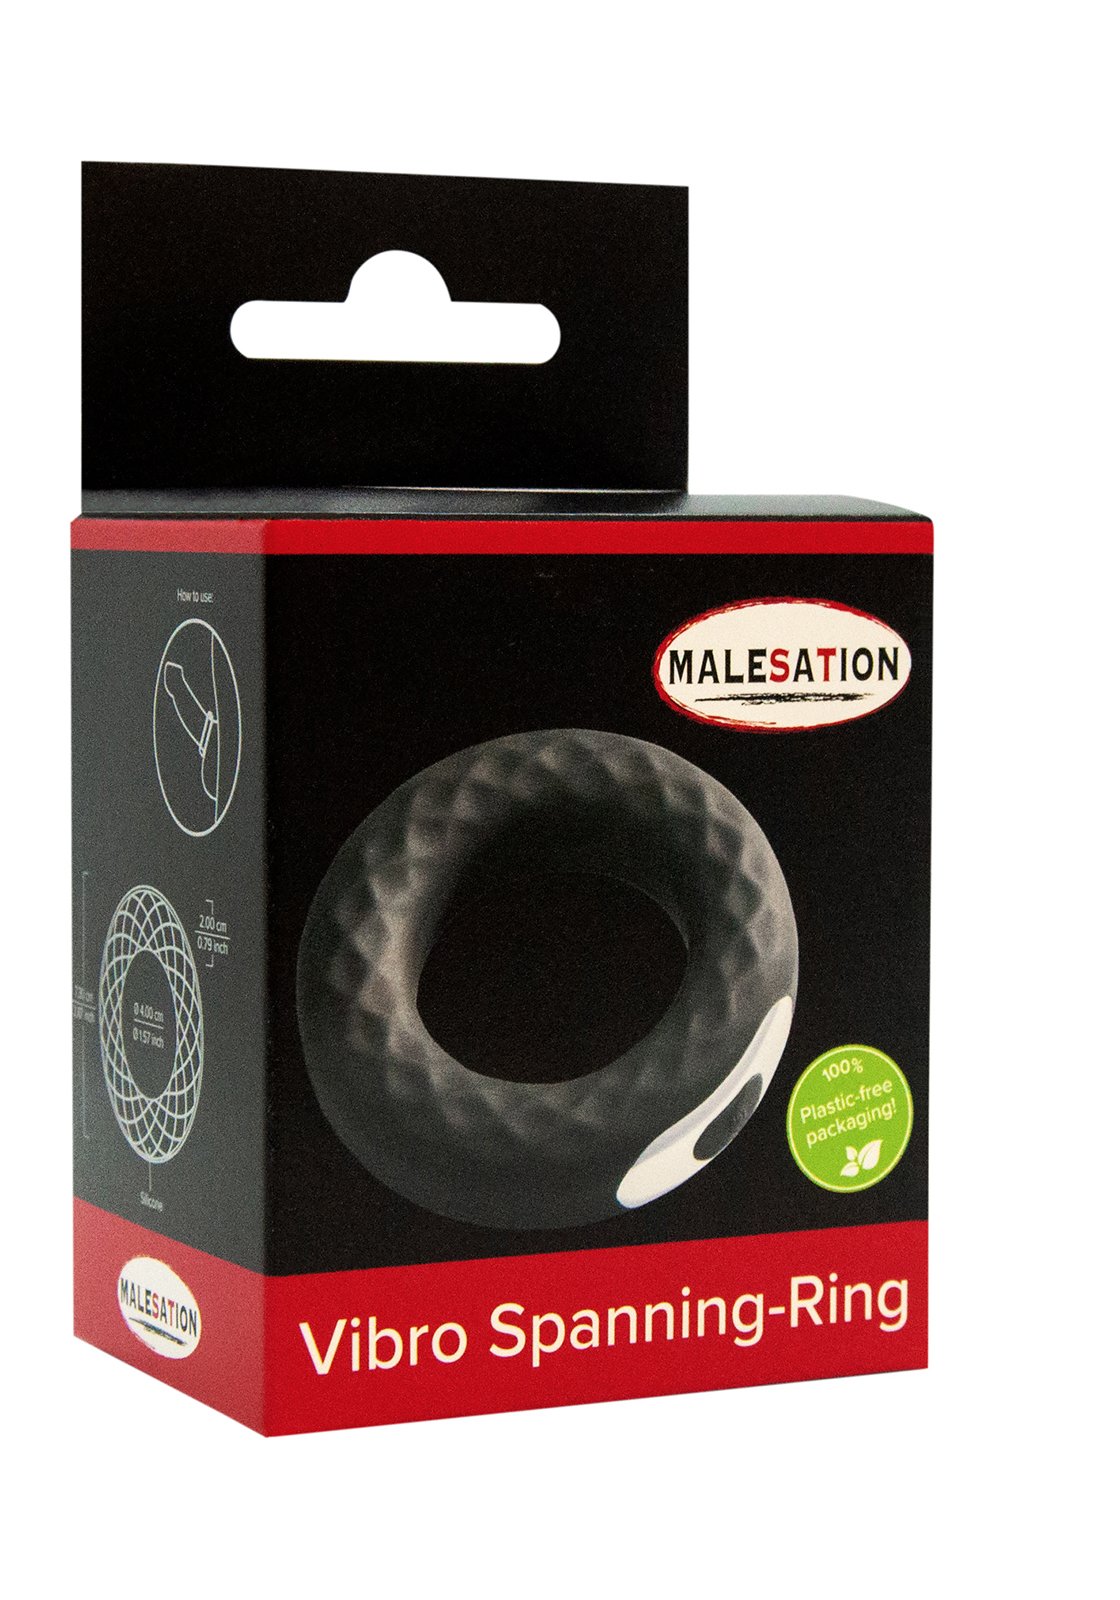 Vibro Spanning-Ring